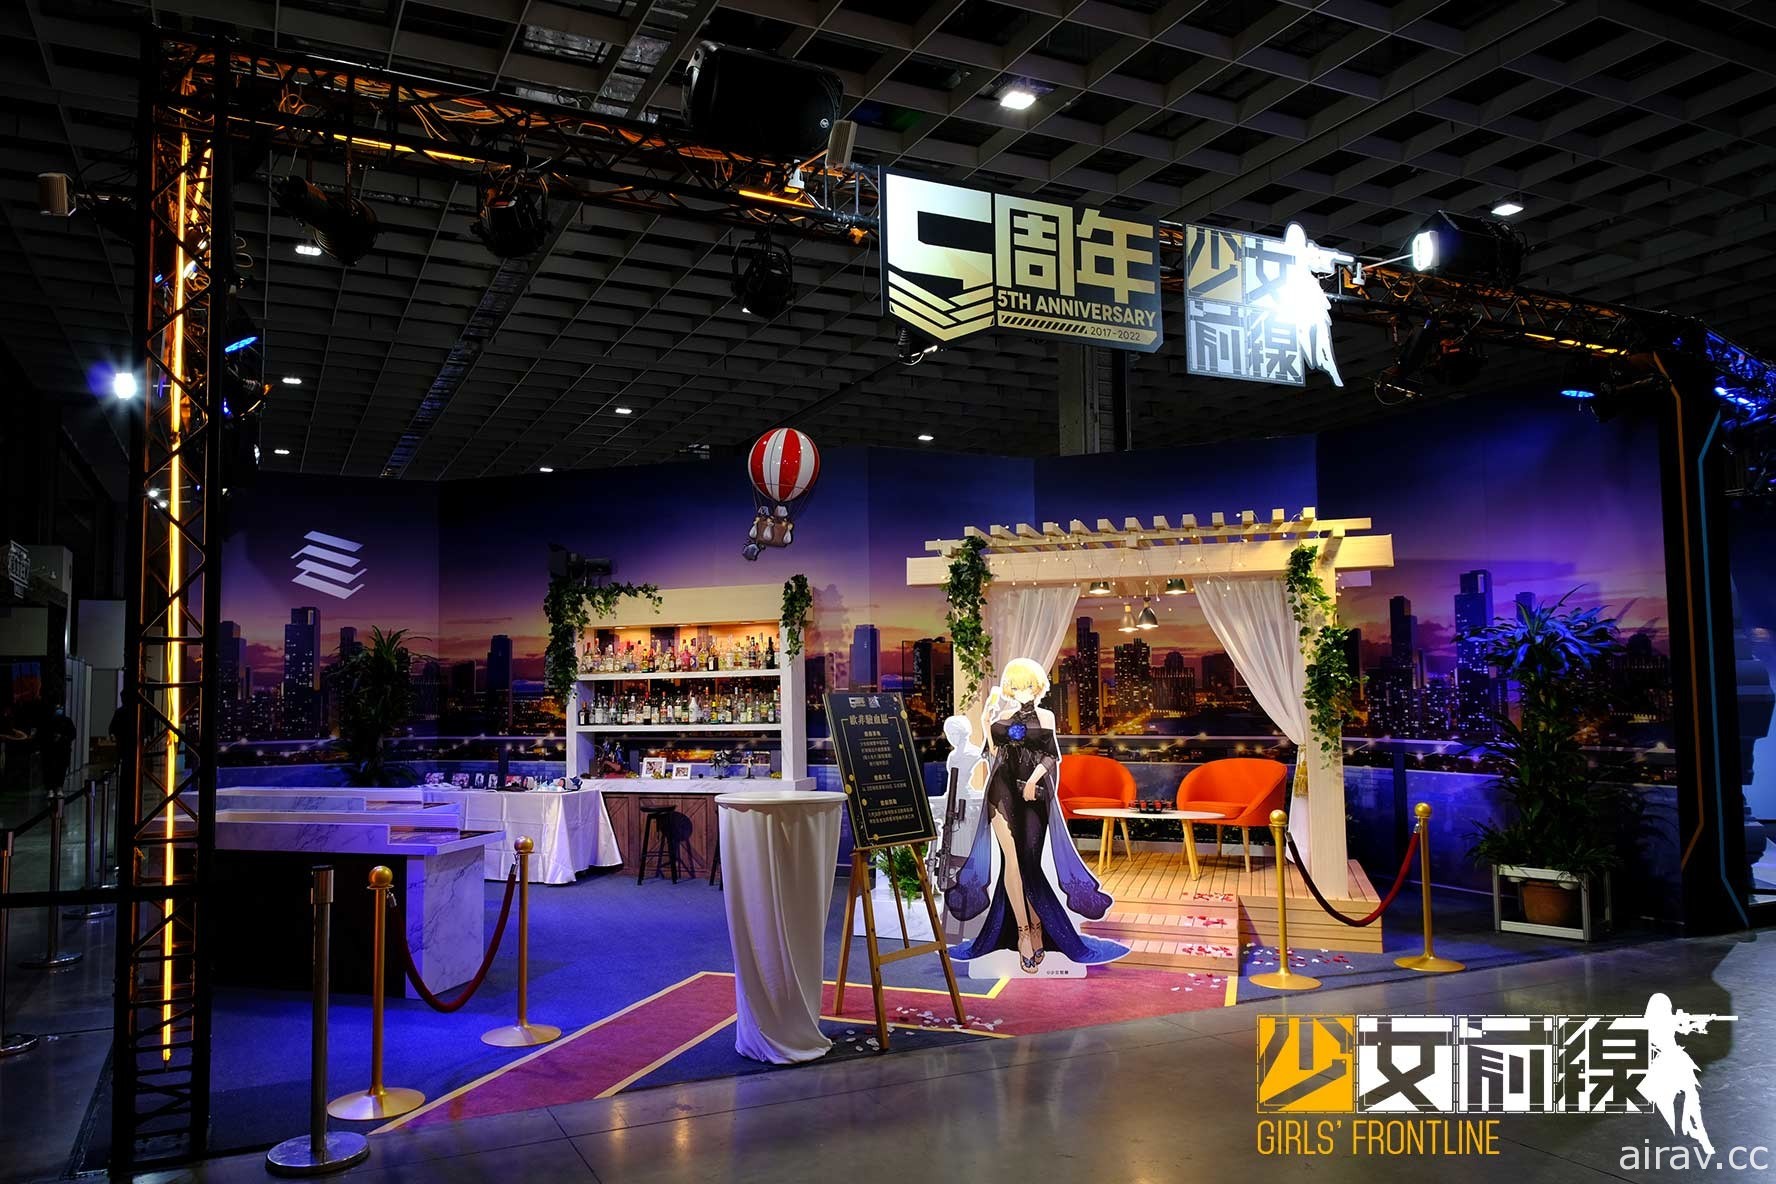 【TpGS 22】《明日方舟》《少女前线》 2022 台北国际电玩展圆满落幕 释出展会花絮